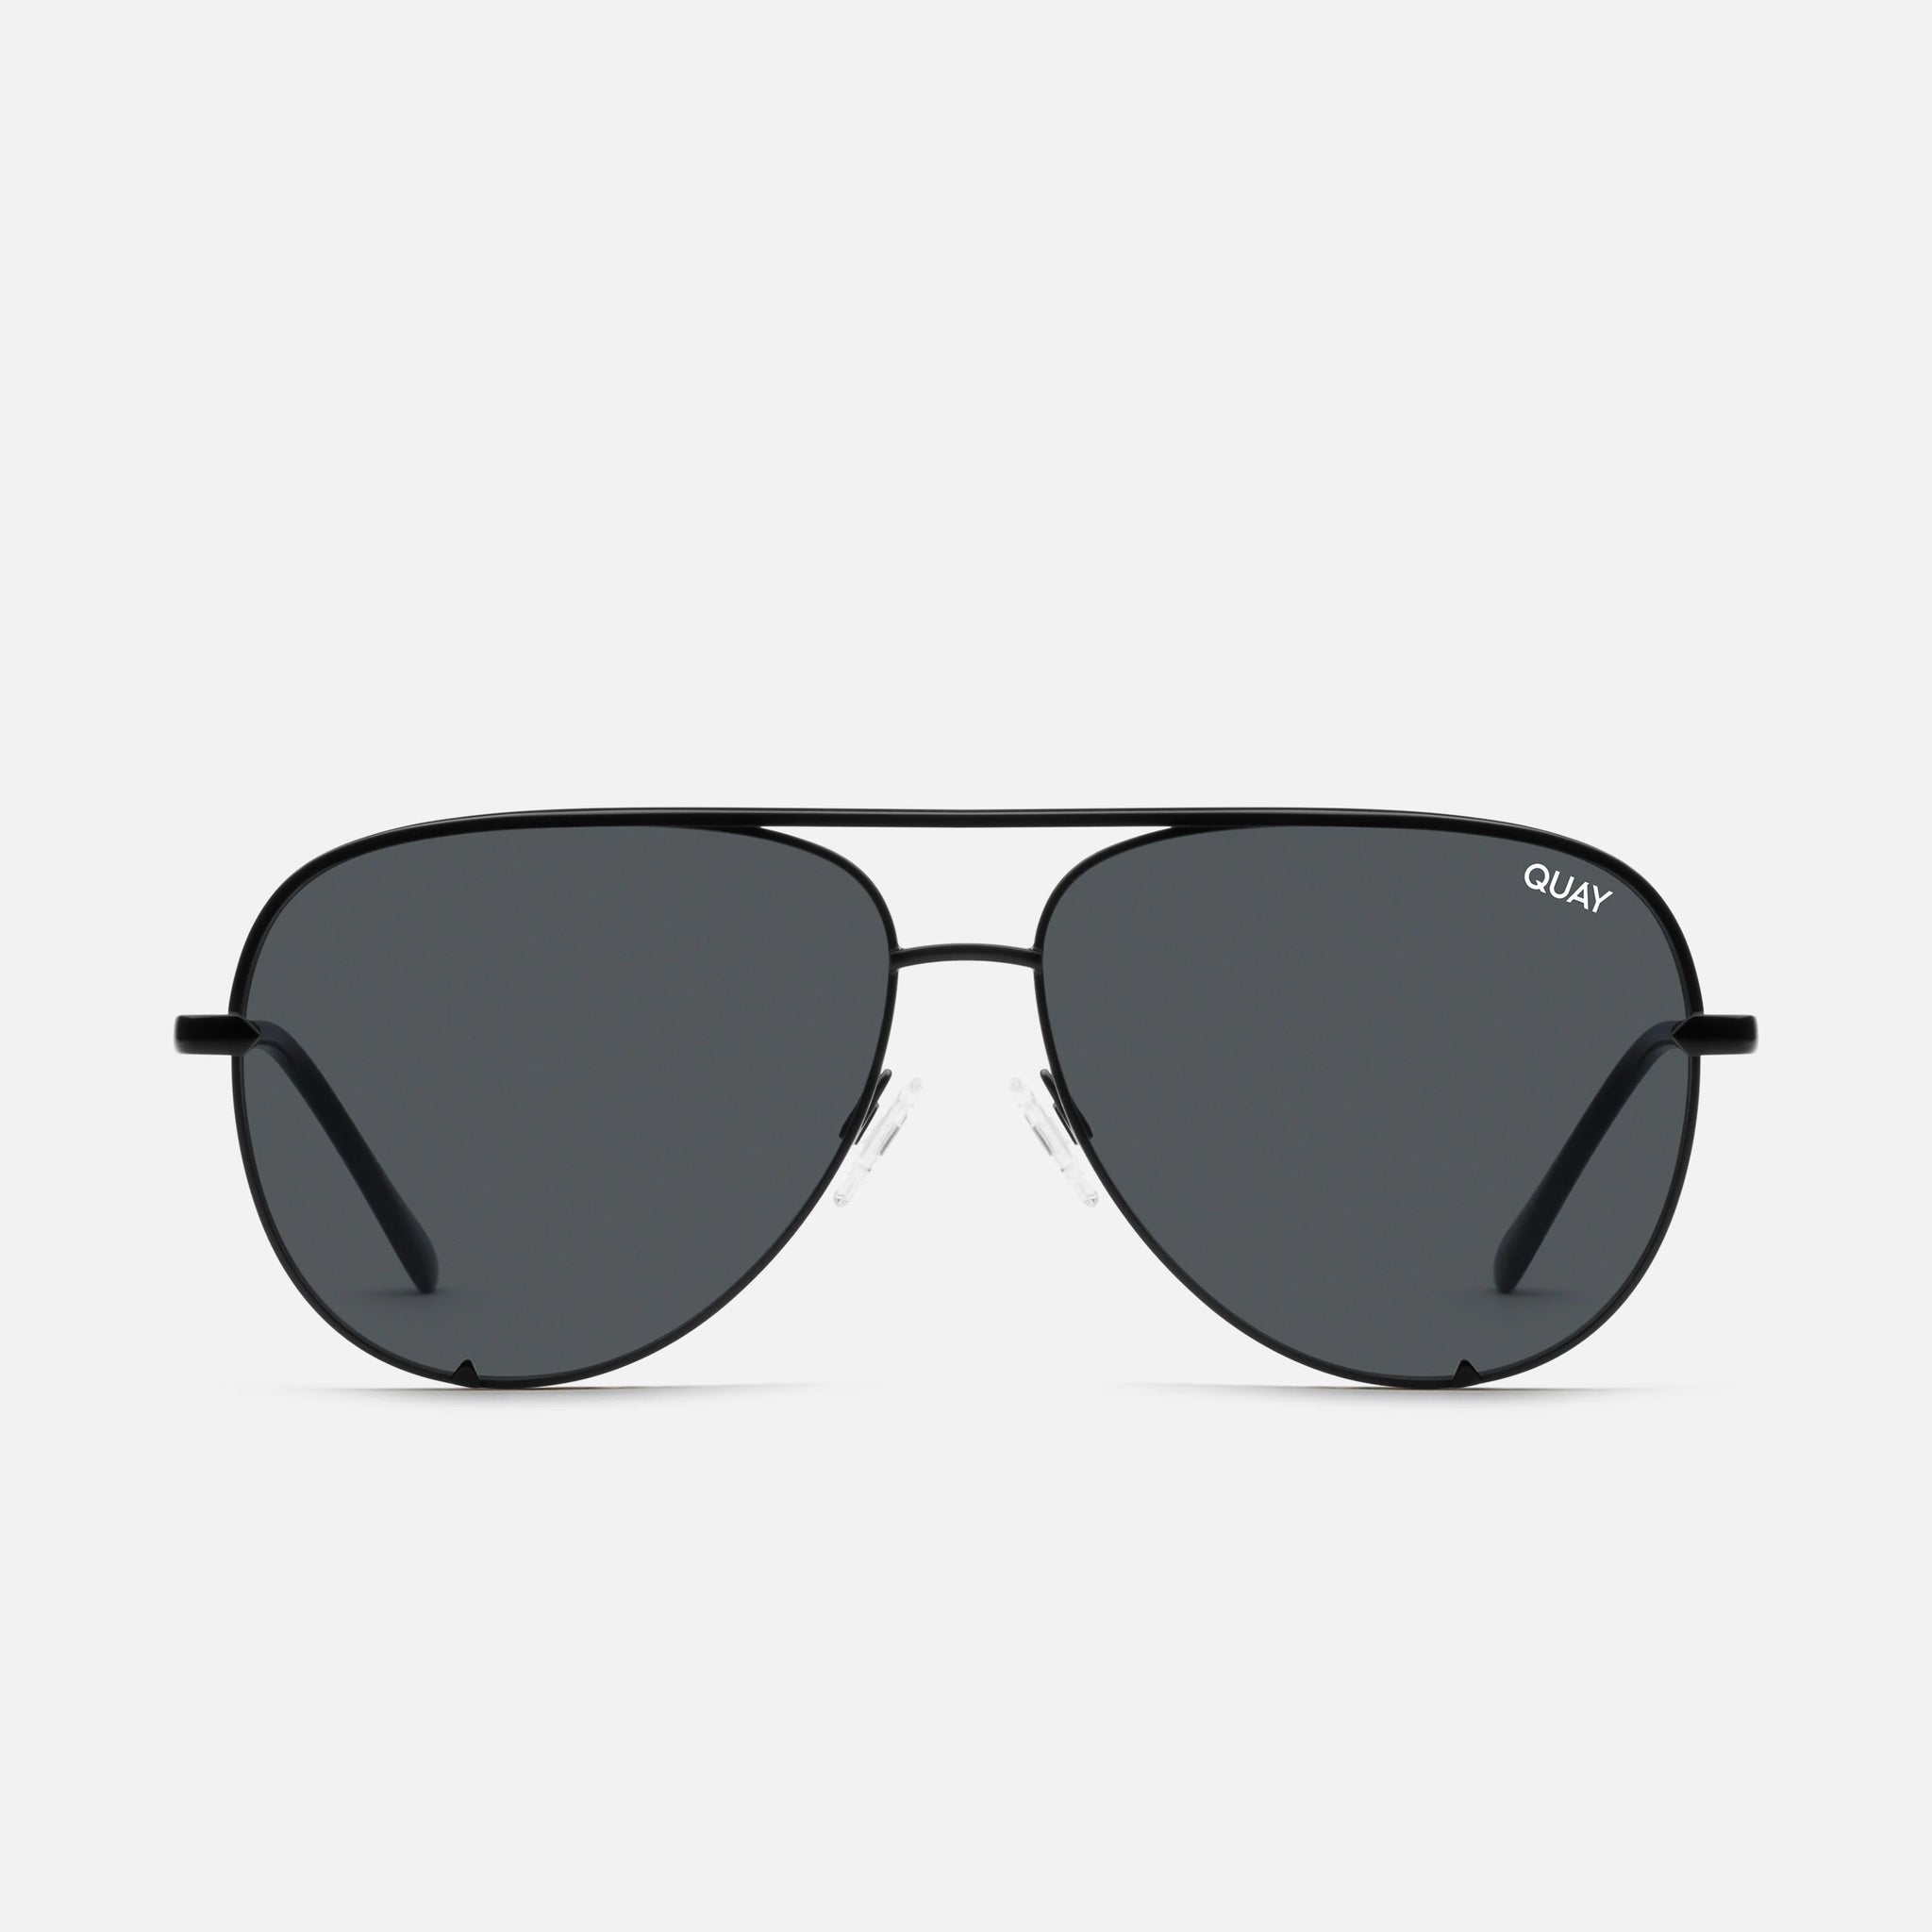 QUAY High Key Extra Large Sunglasses - Black/Smoke